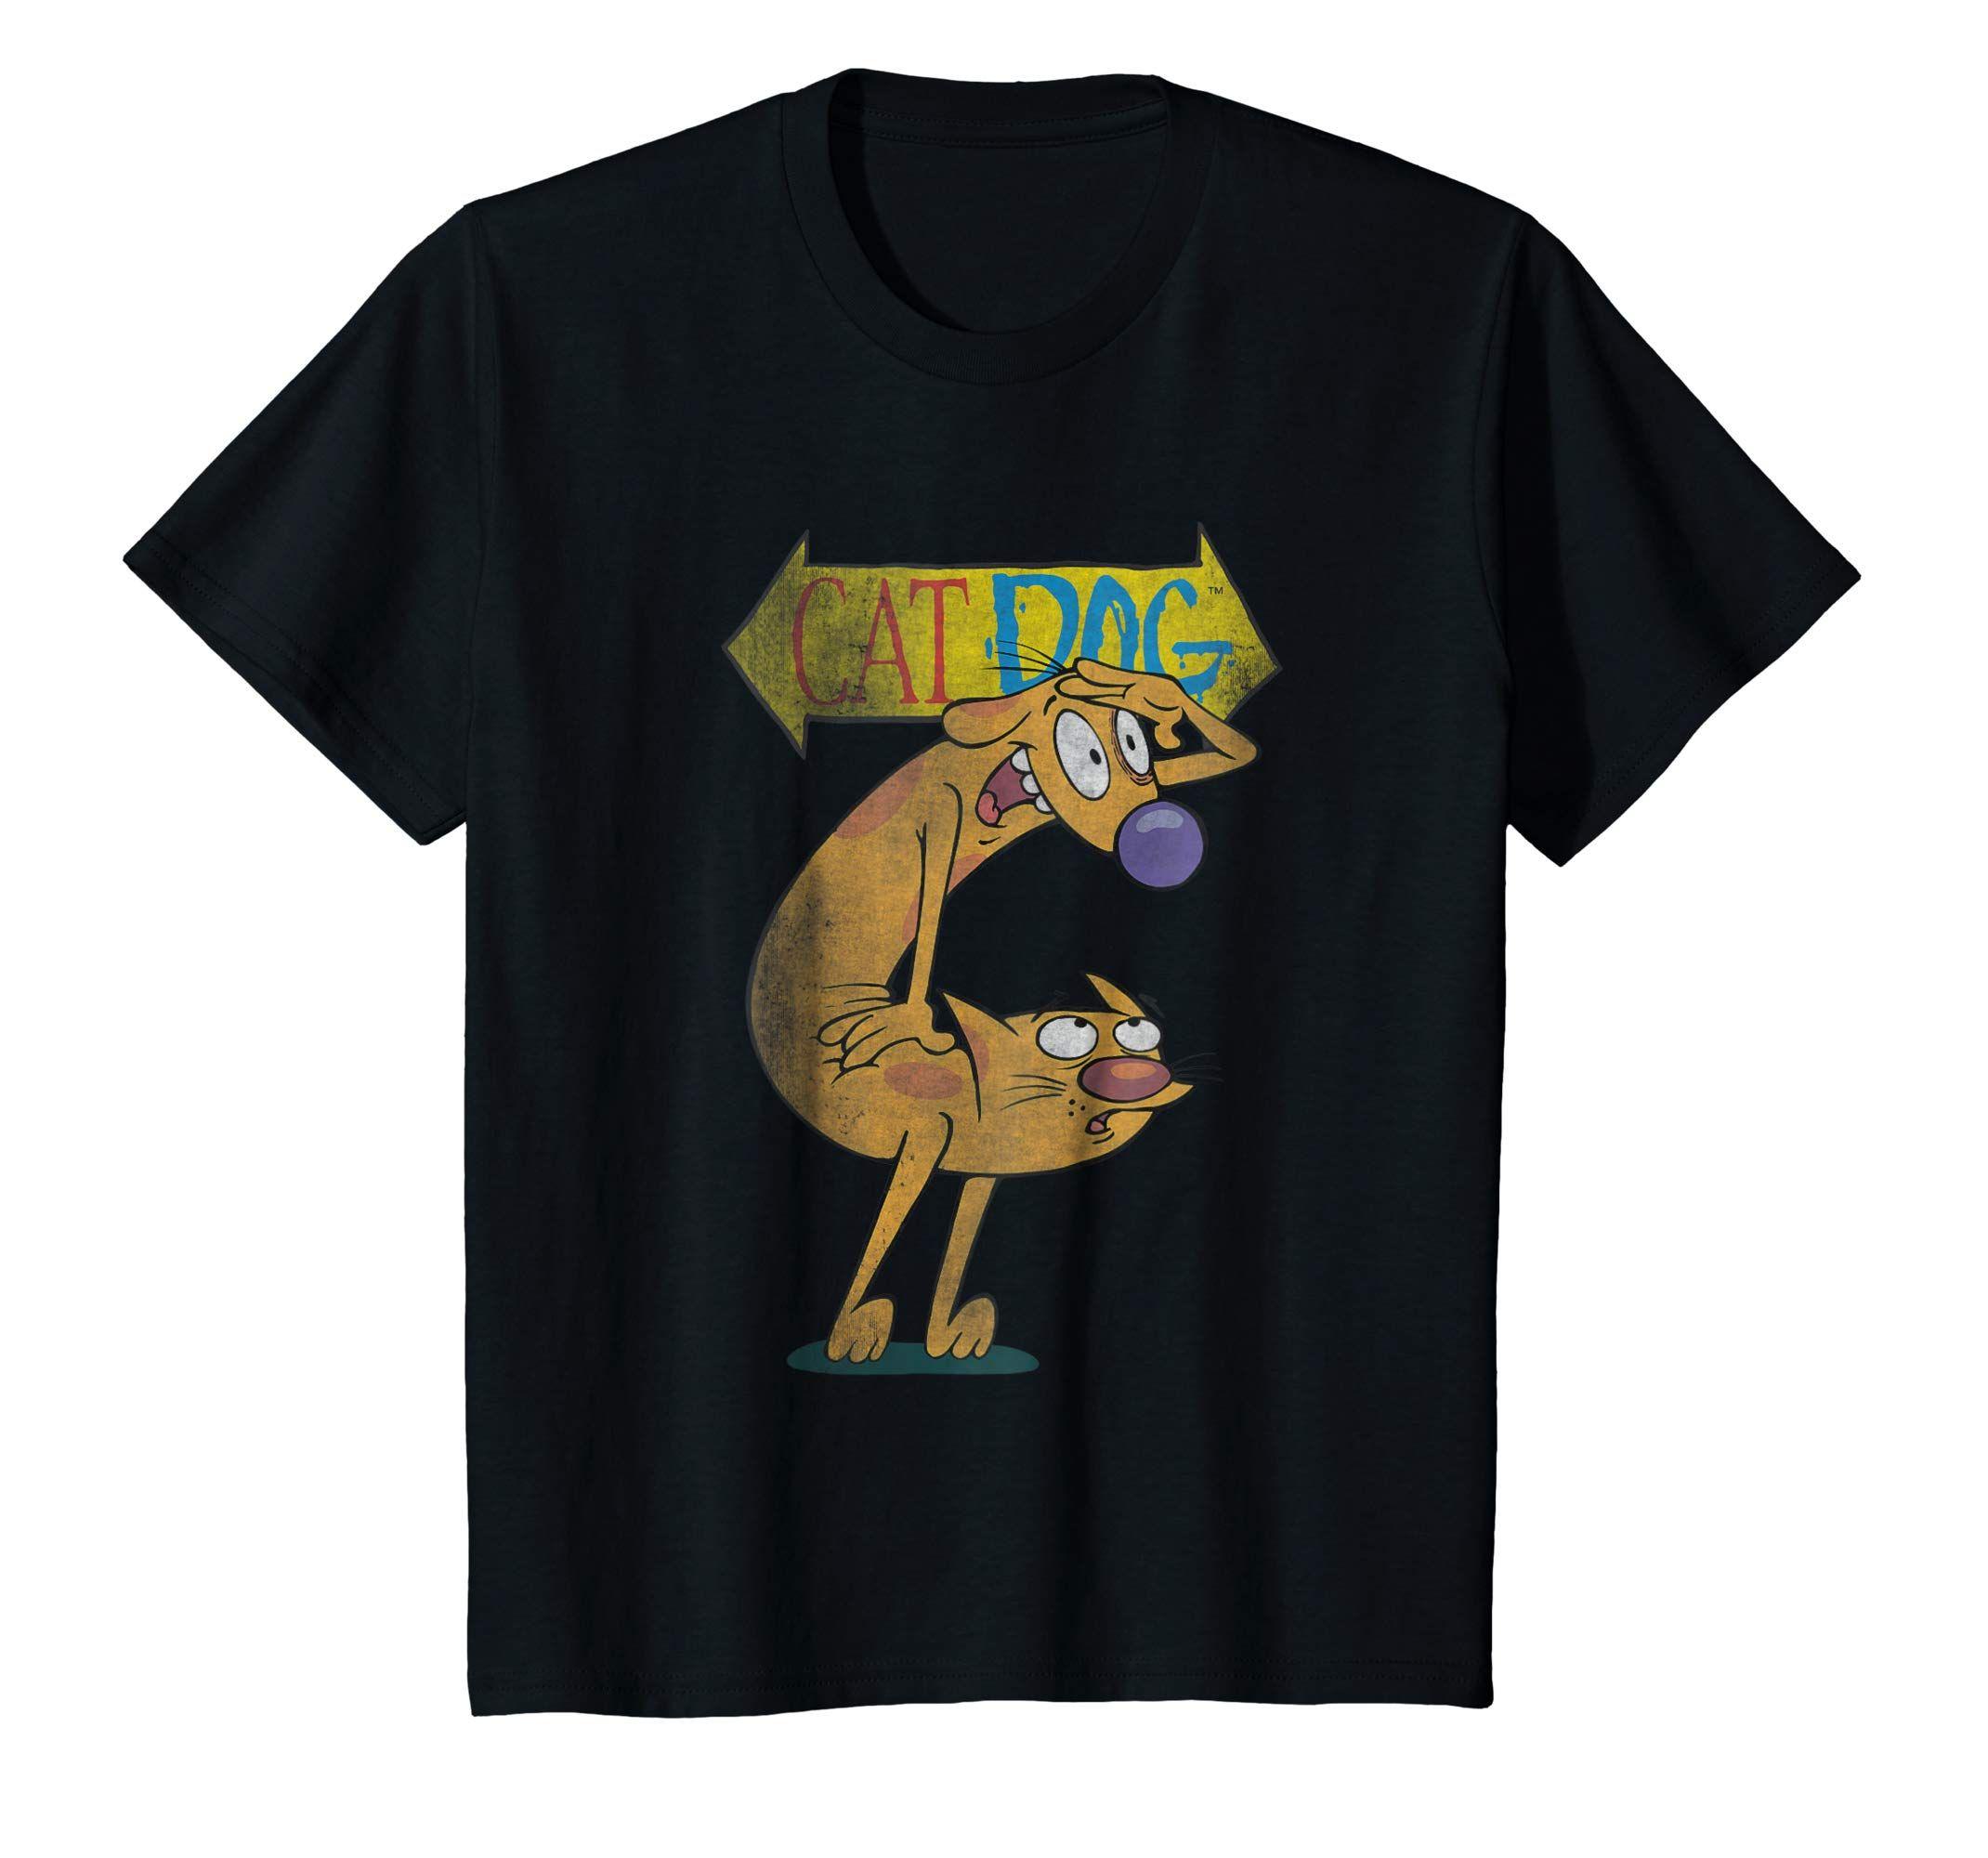 Catdog Logo - Amazon.com: Nickelodeon CatDog Character Logo T-Shirt: Clothing